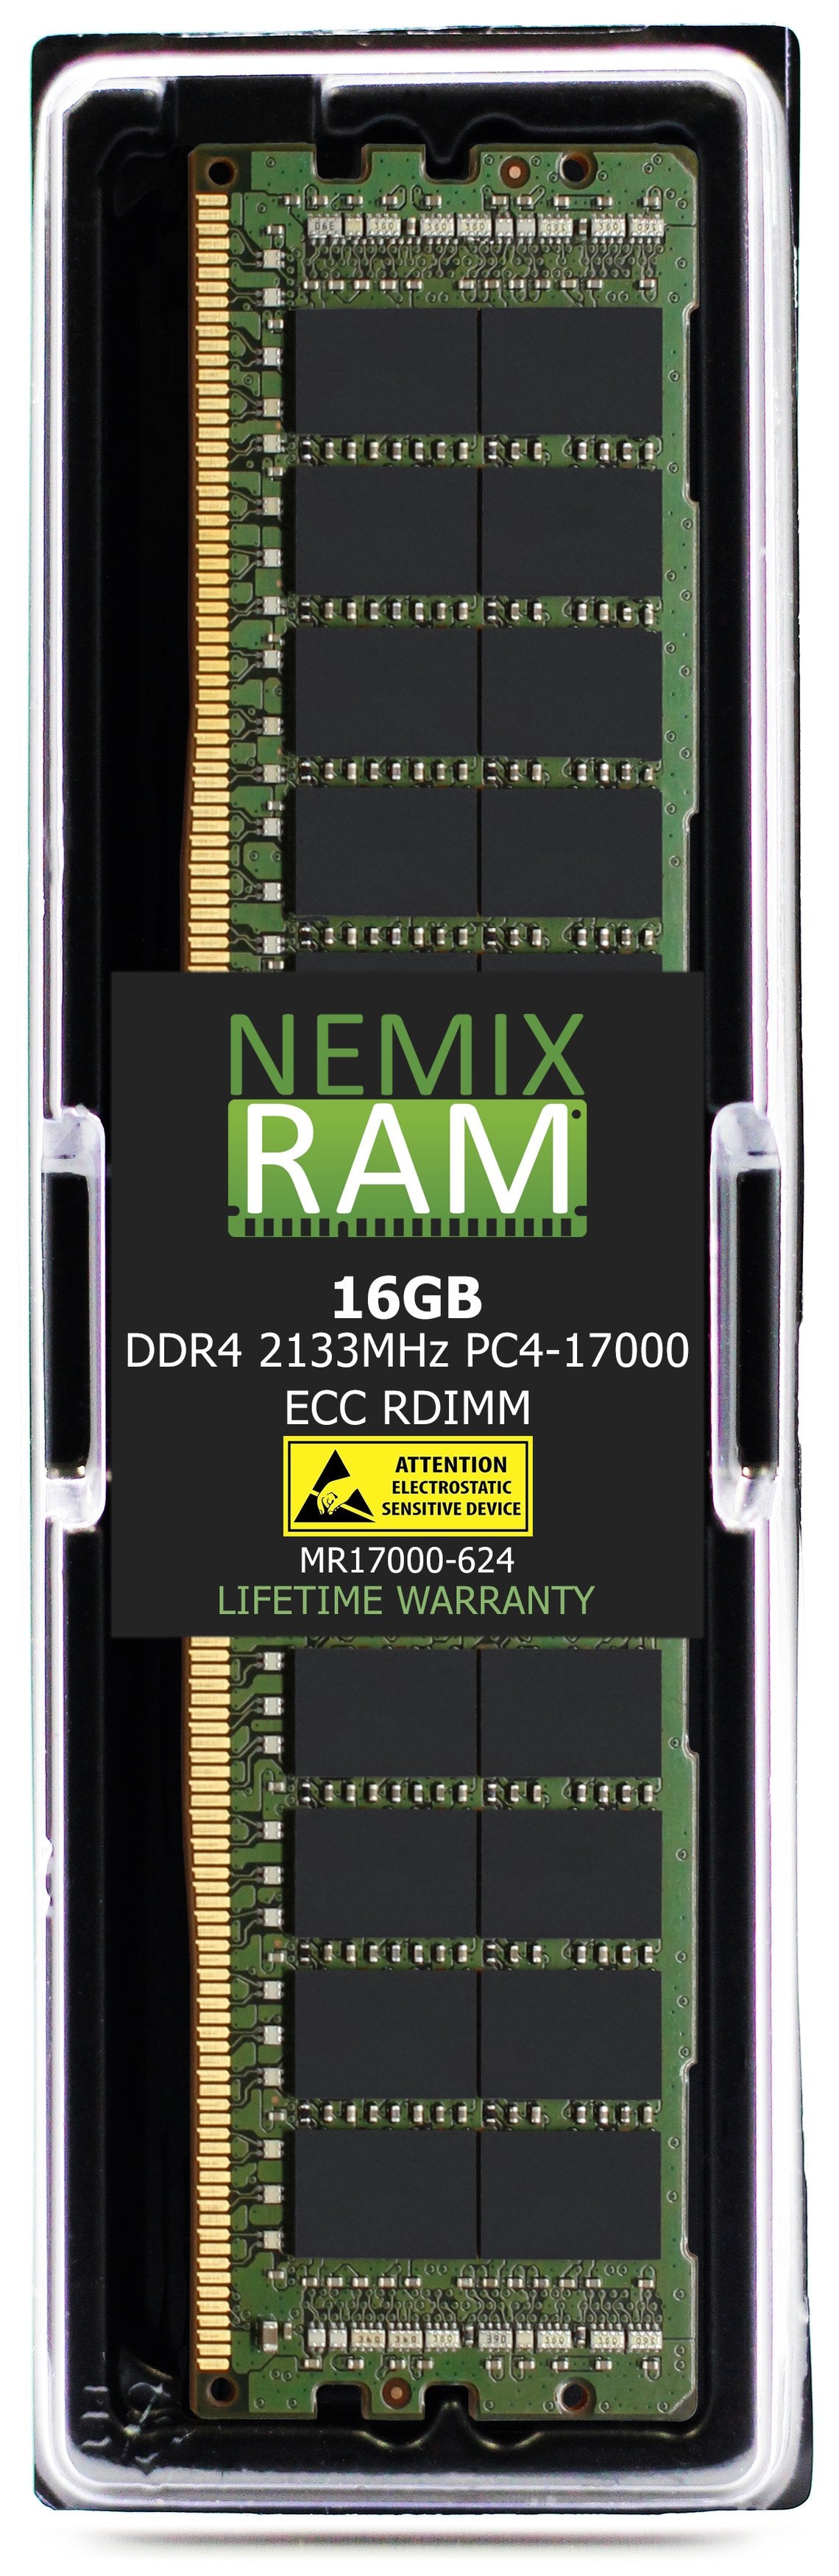 16GB DDR4 2133HZ PC4-17000 VLP RDIMM Compatible with Supermicro MEM-DR416L-SV01-ER21